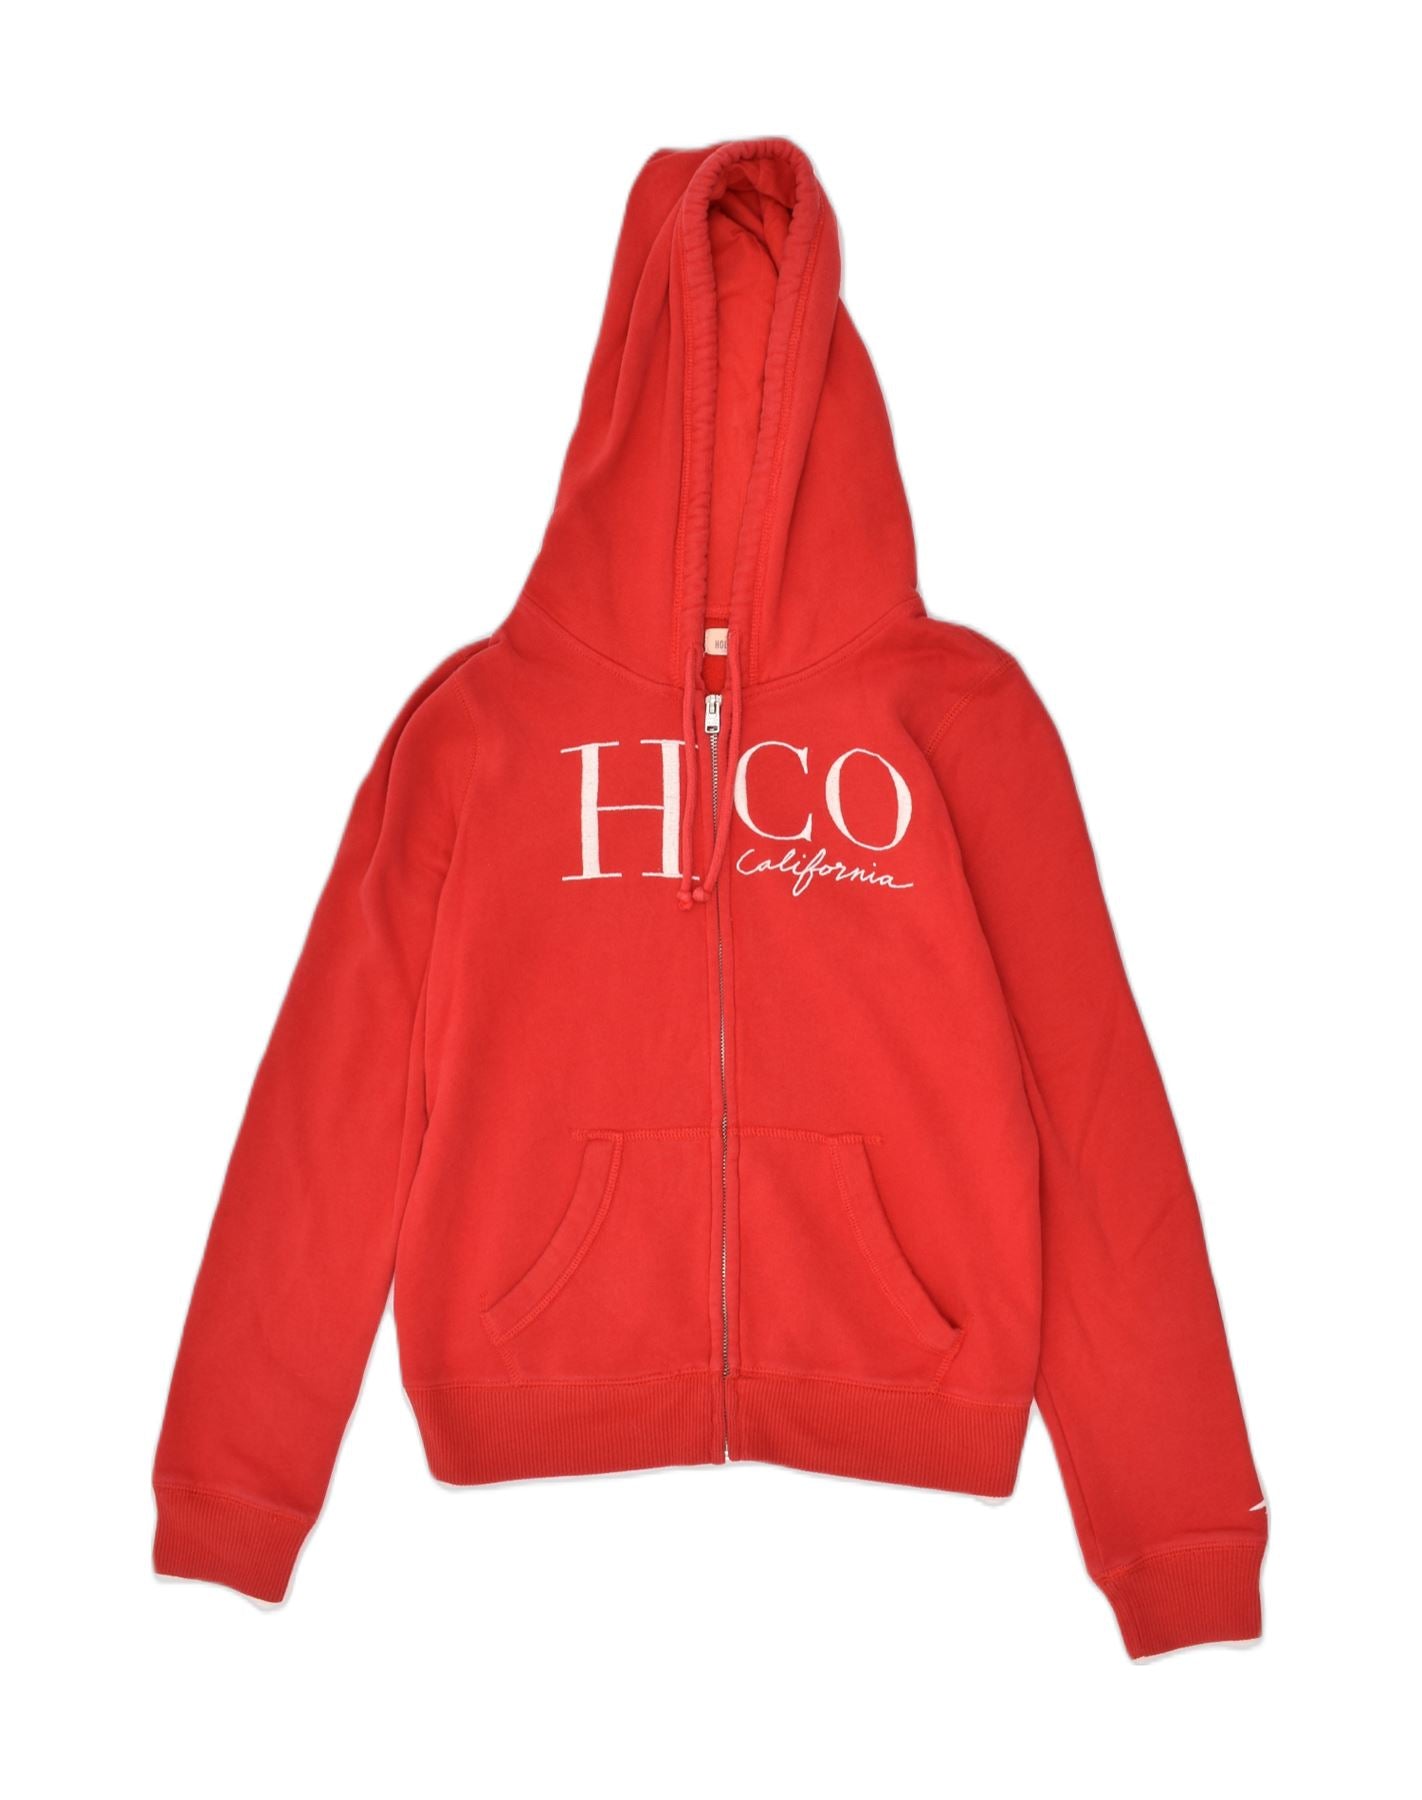 Hollister Hoodie Full Zip Red Sweater Women's Size Medium Good Condition